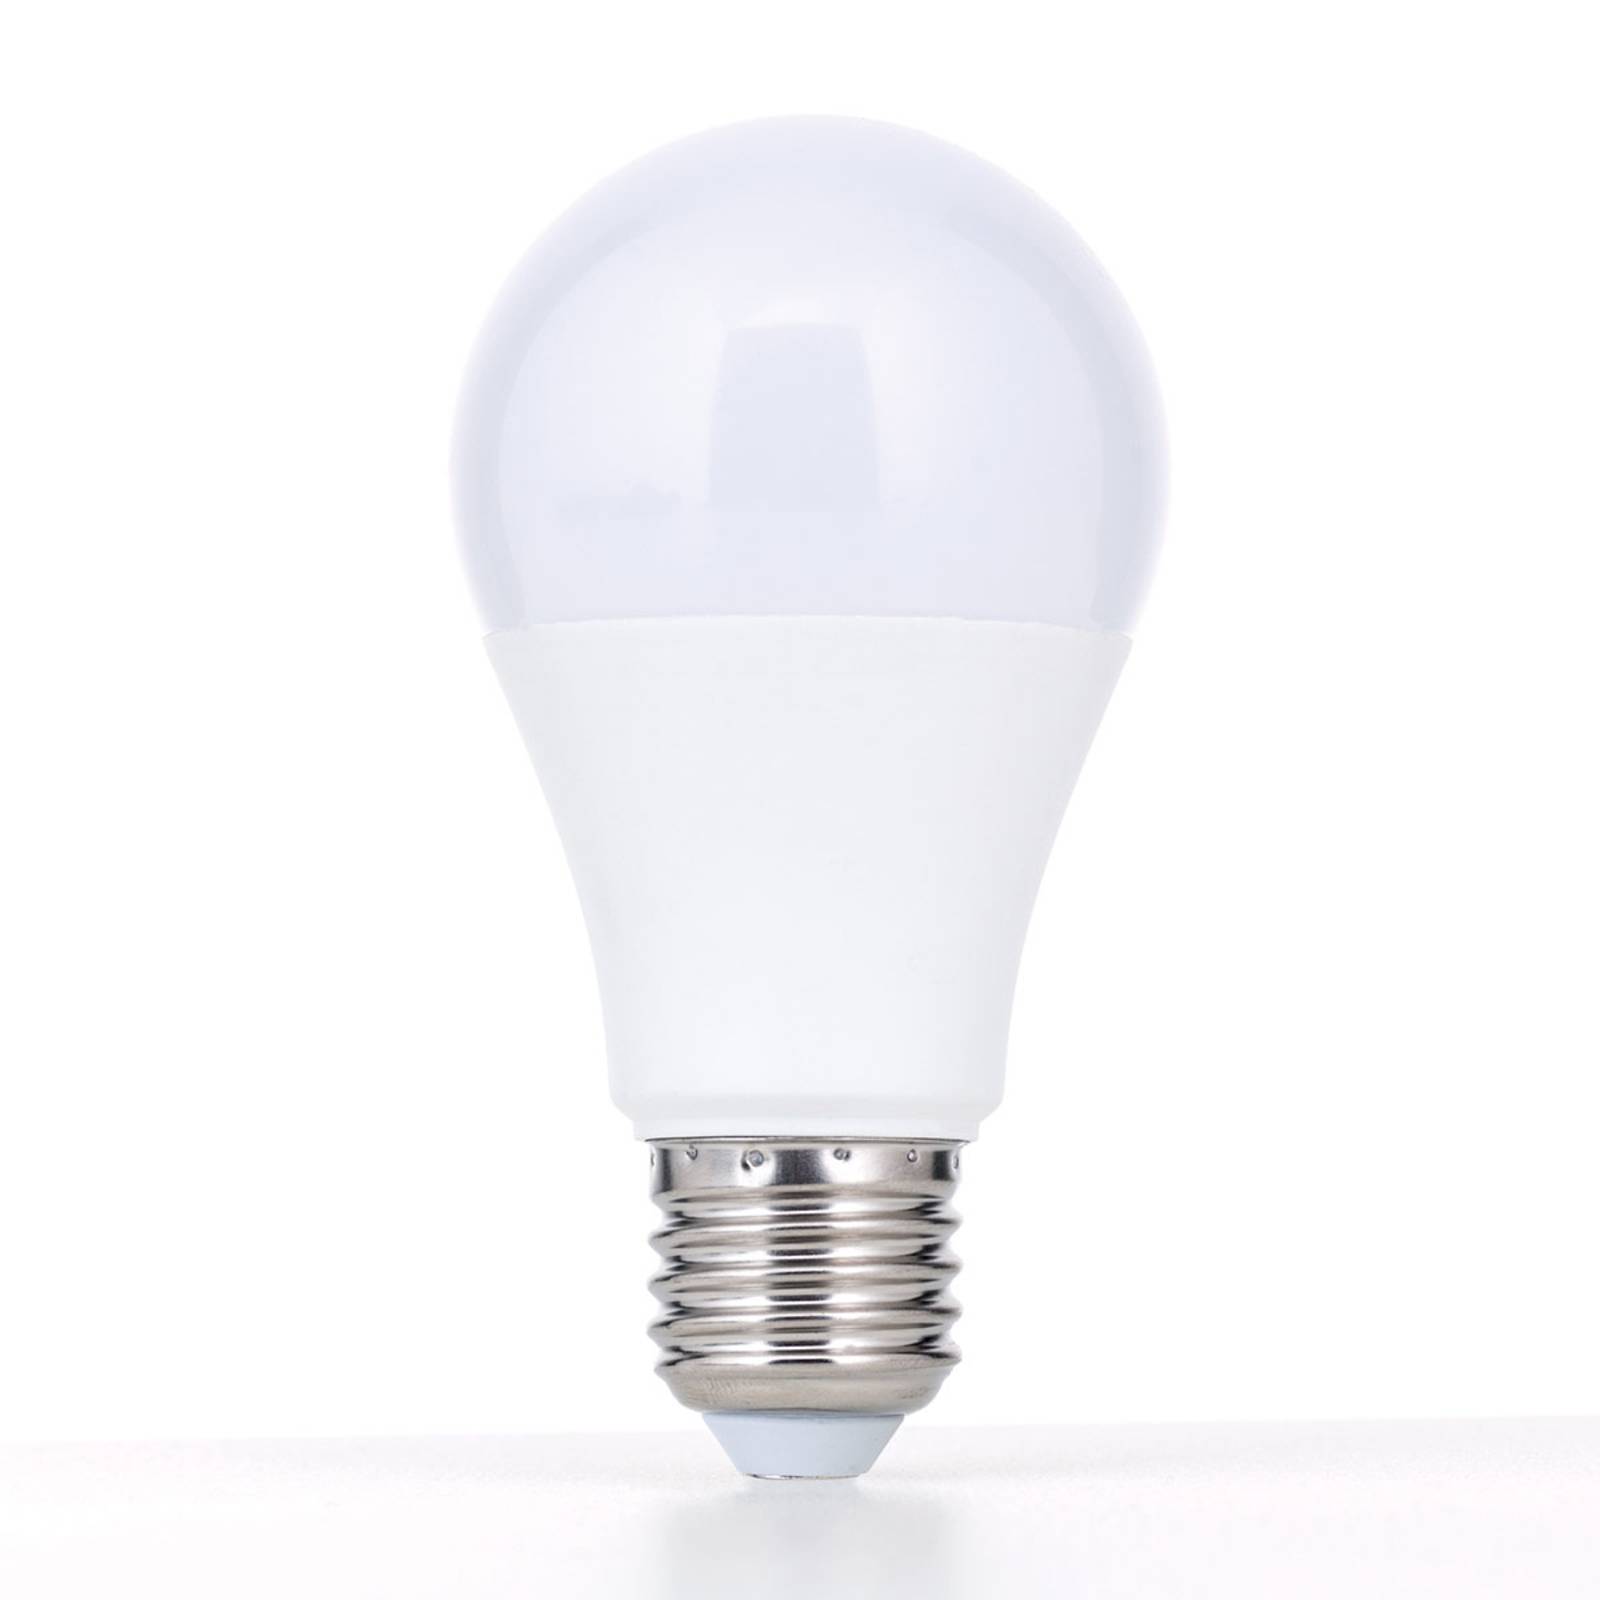 Ampoule LED E27 5 W, blanc chaud, non dimmable